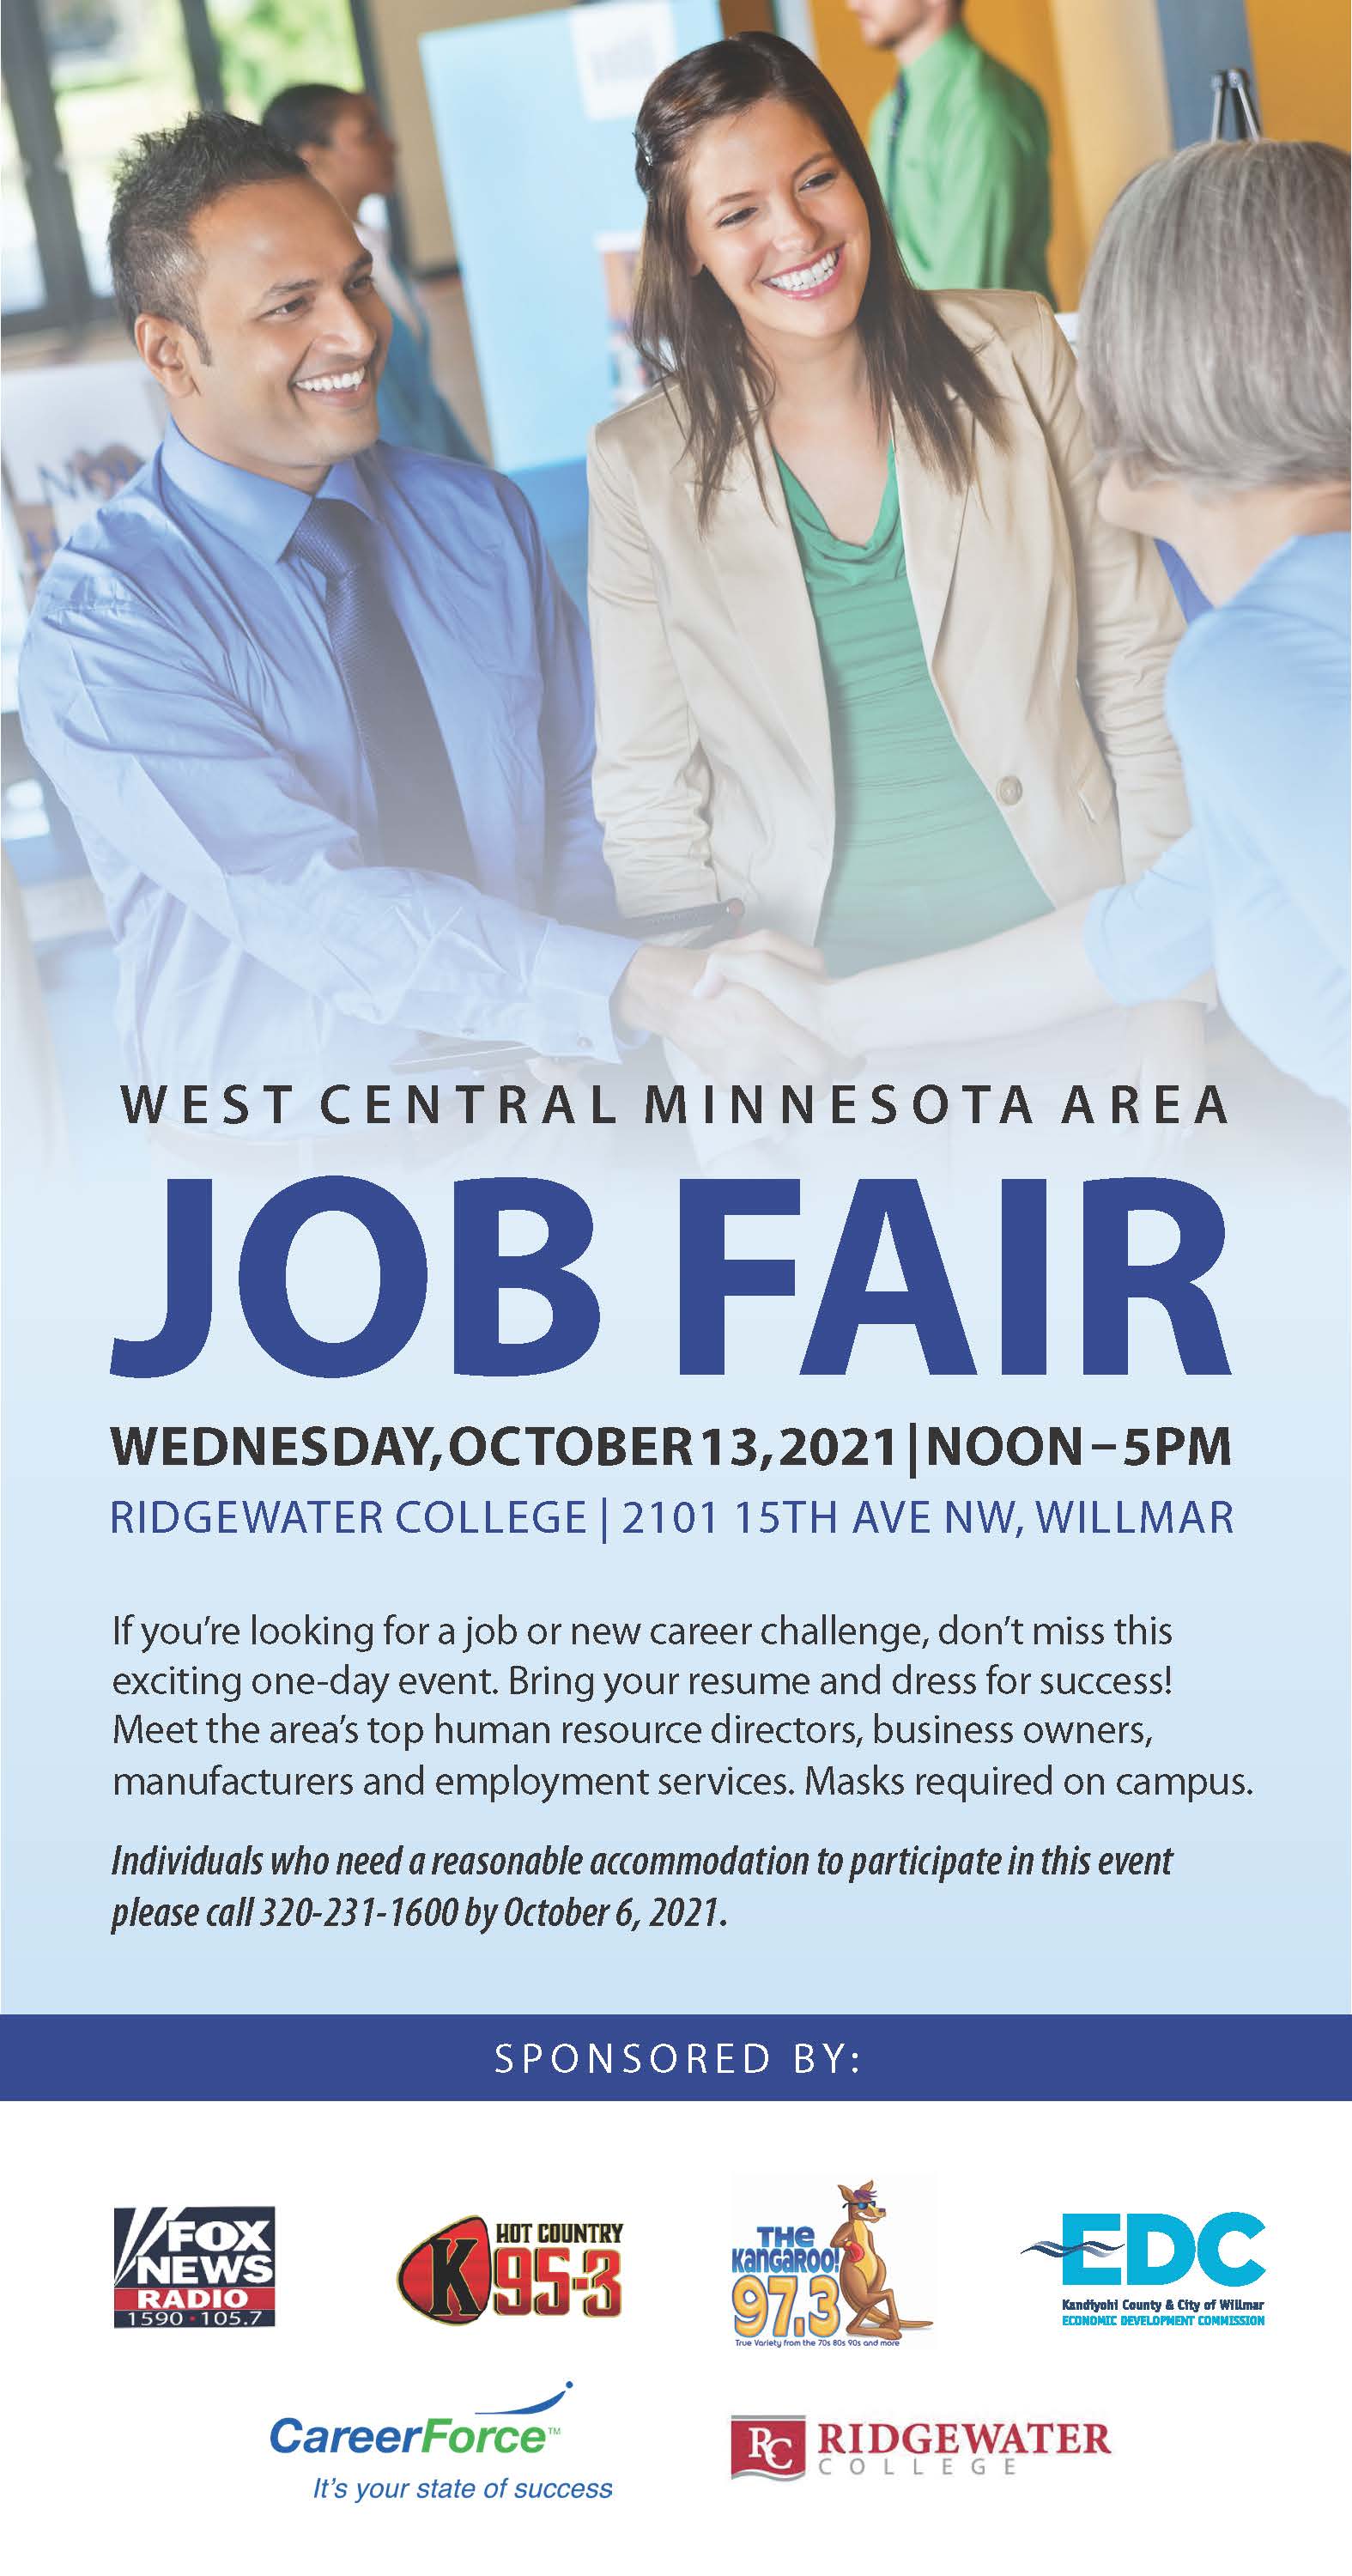 EDC co-sponsors West Central Minnesota Area Job Fair